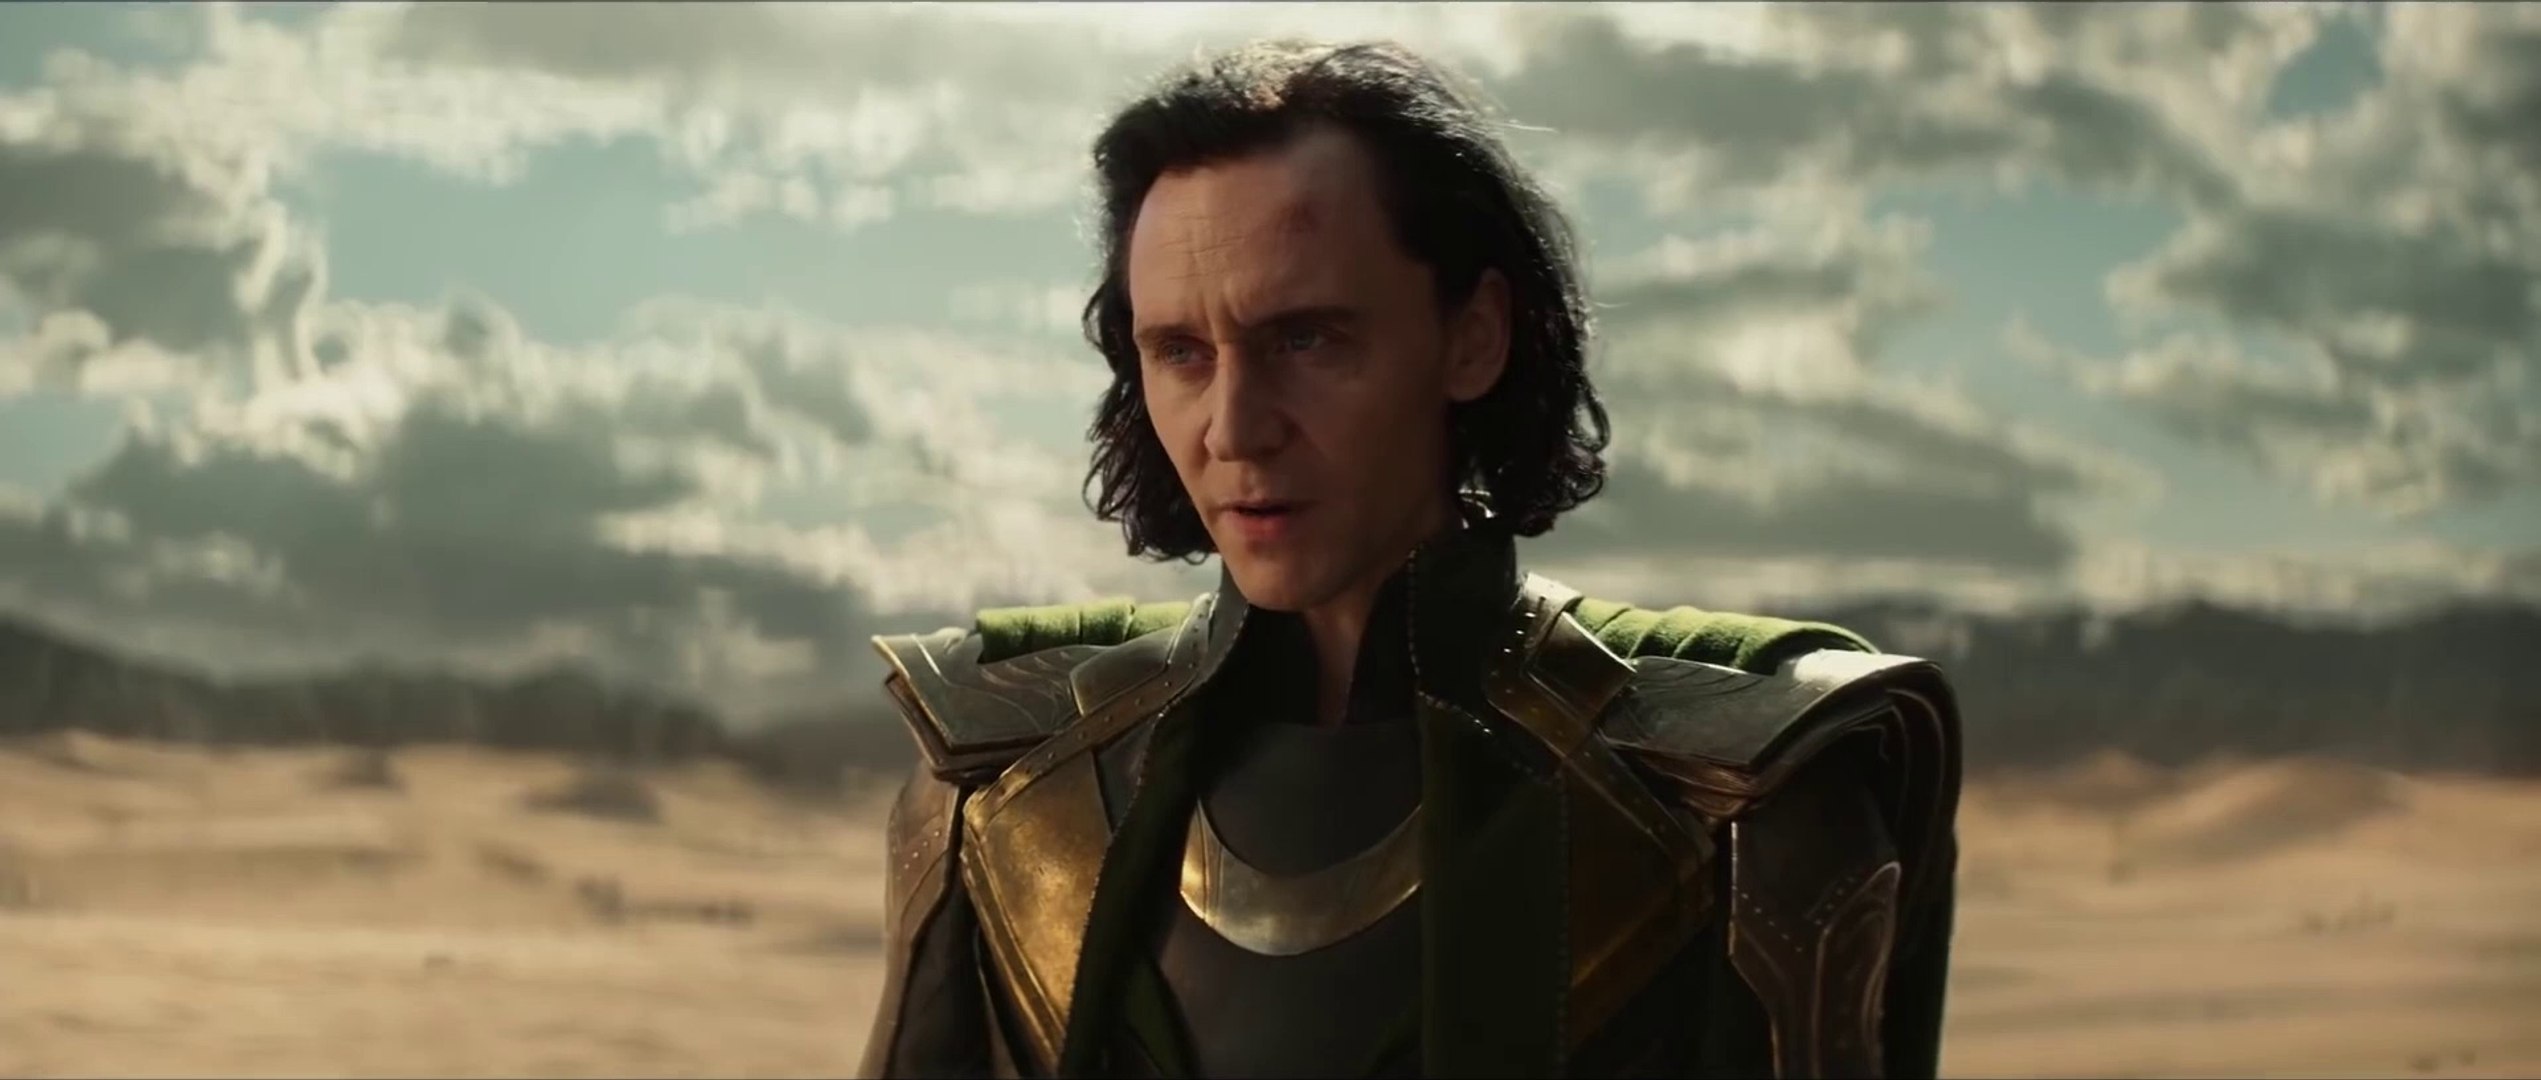 Chance - Marvel Studios' Loki | Disney+ | New Teaser - video Dailymotion